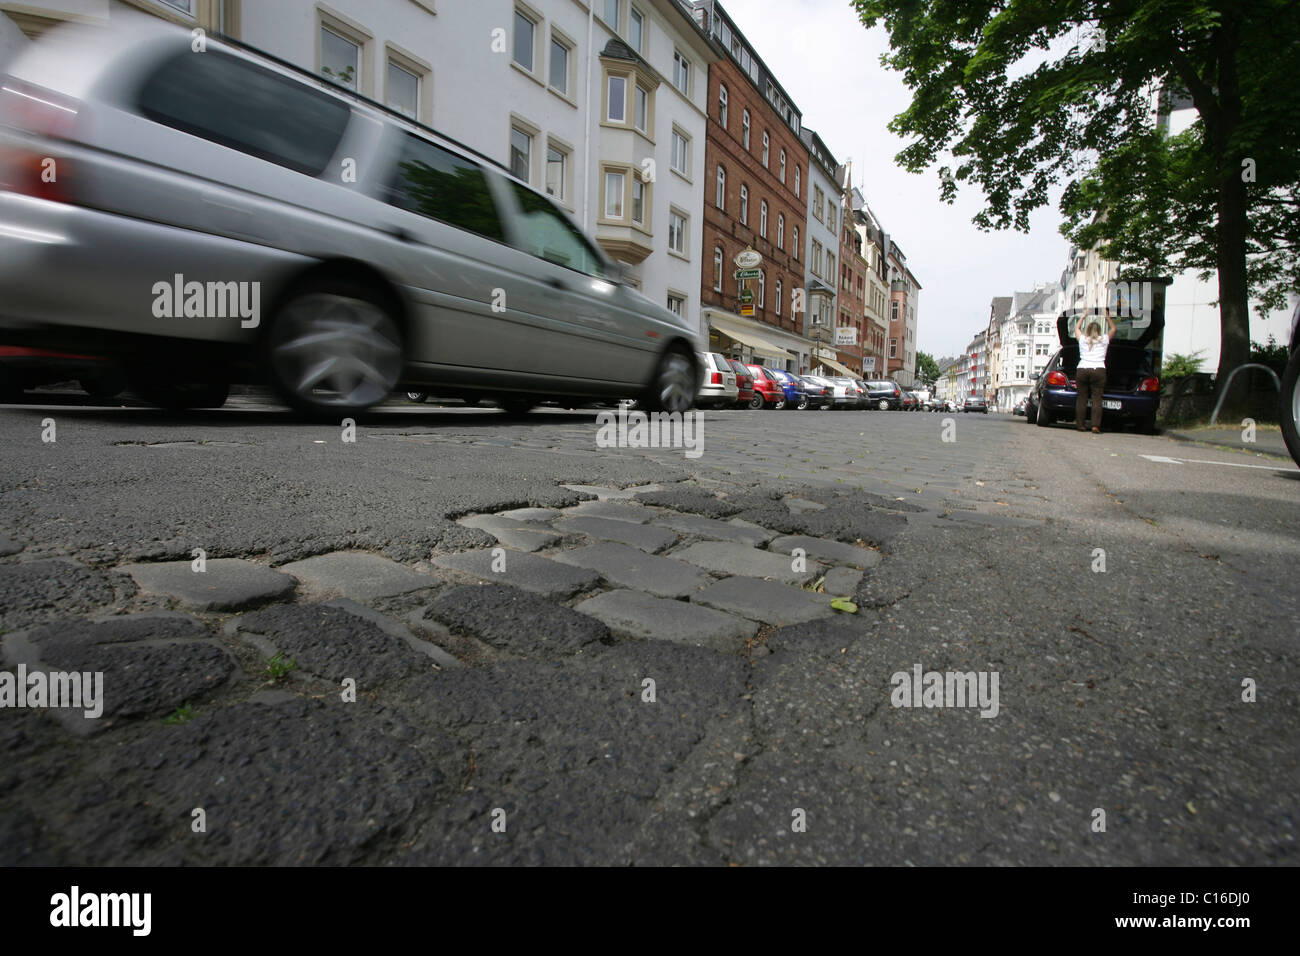 Pothole on an inner city street Stock Photo